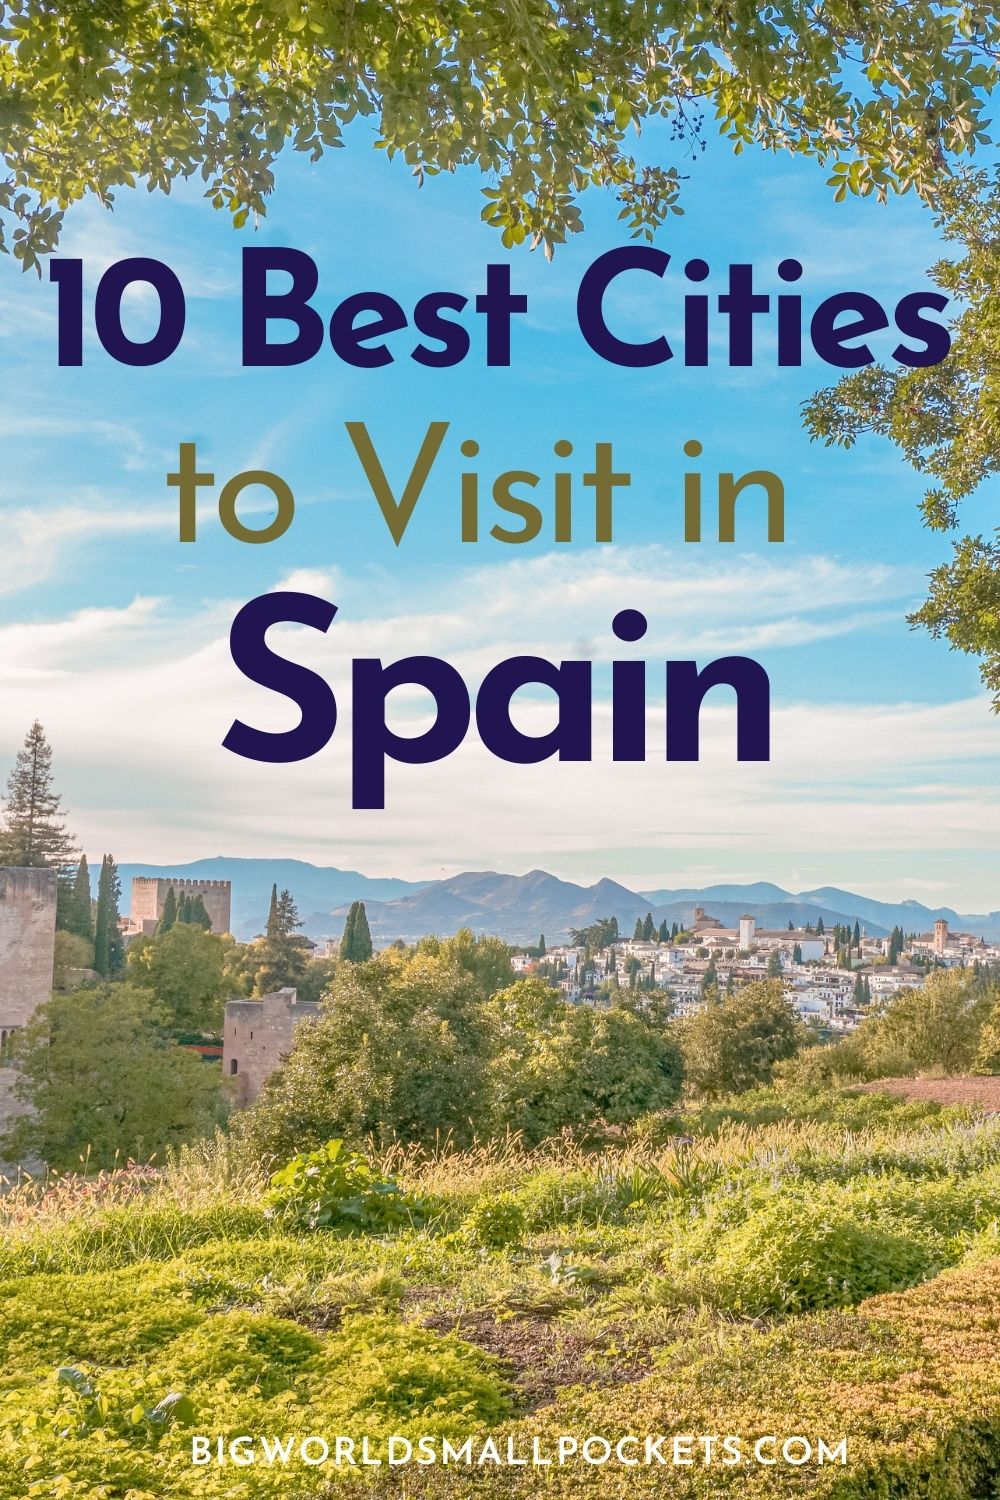 Top 10 Cities to Visit in Spain